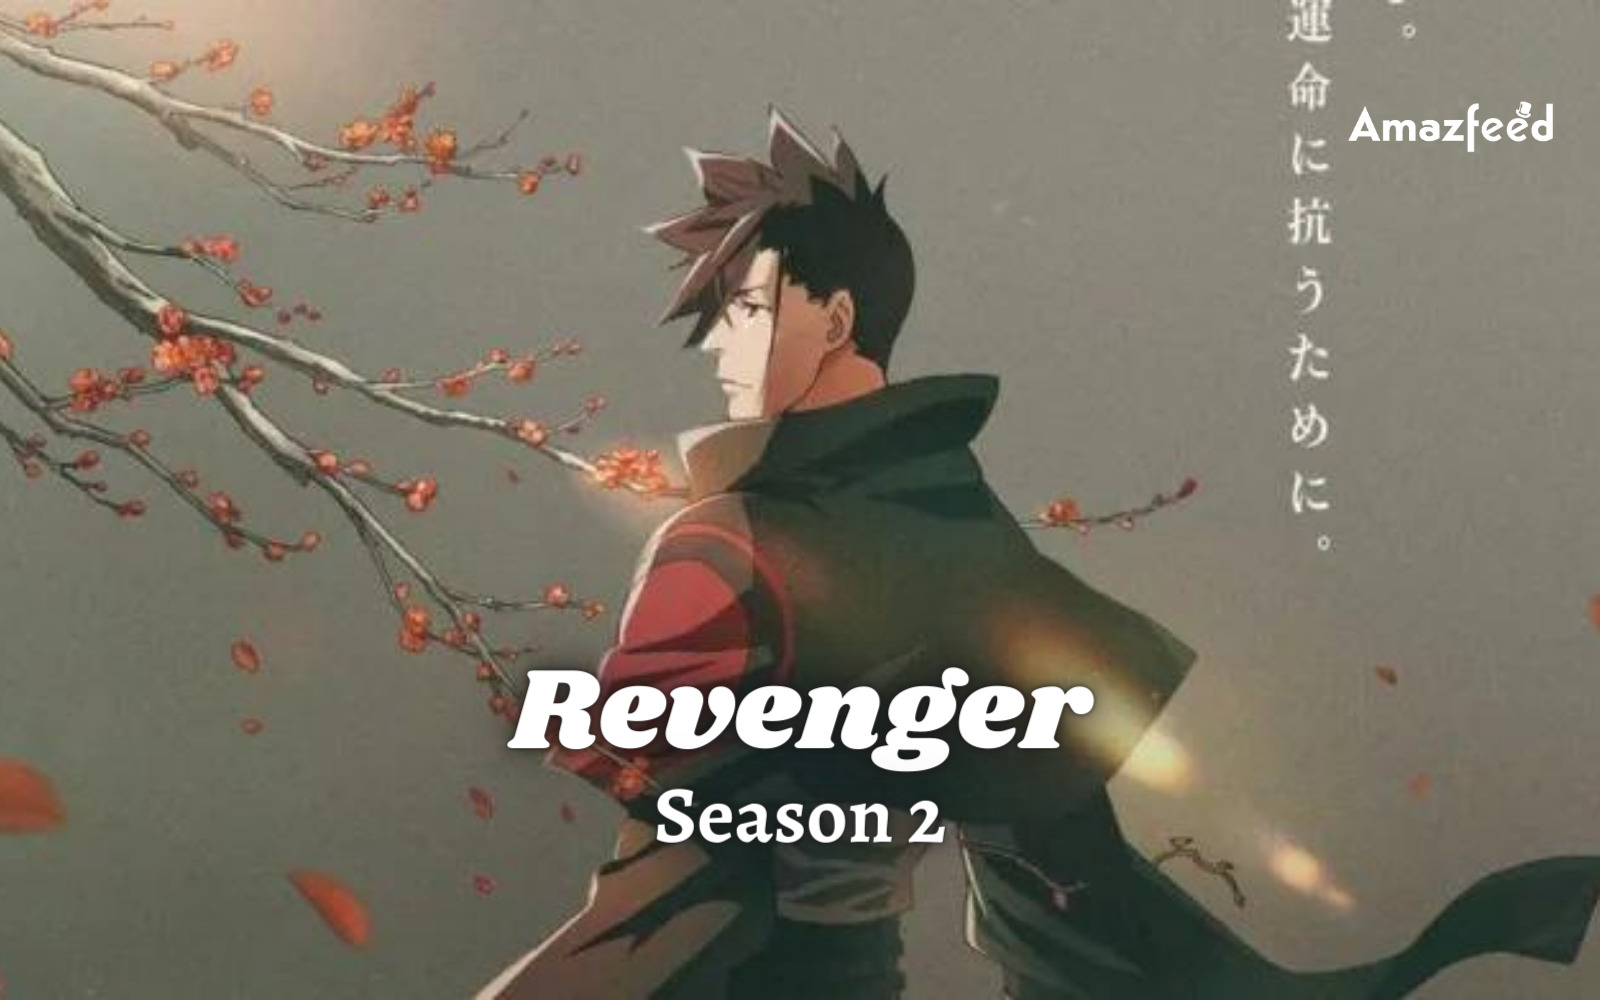 Revenger Season 2 ⇒ Release Date, News, Cast, Spoilers & Updates » Amazfeed